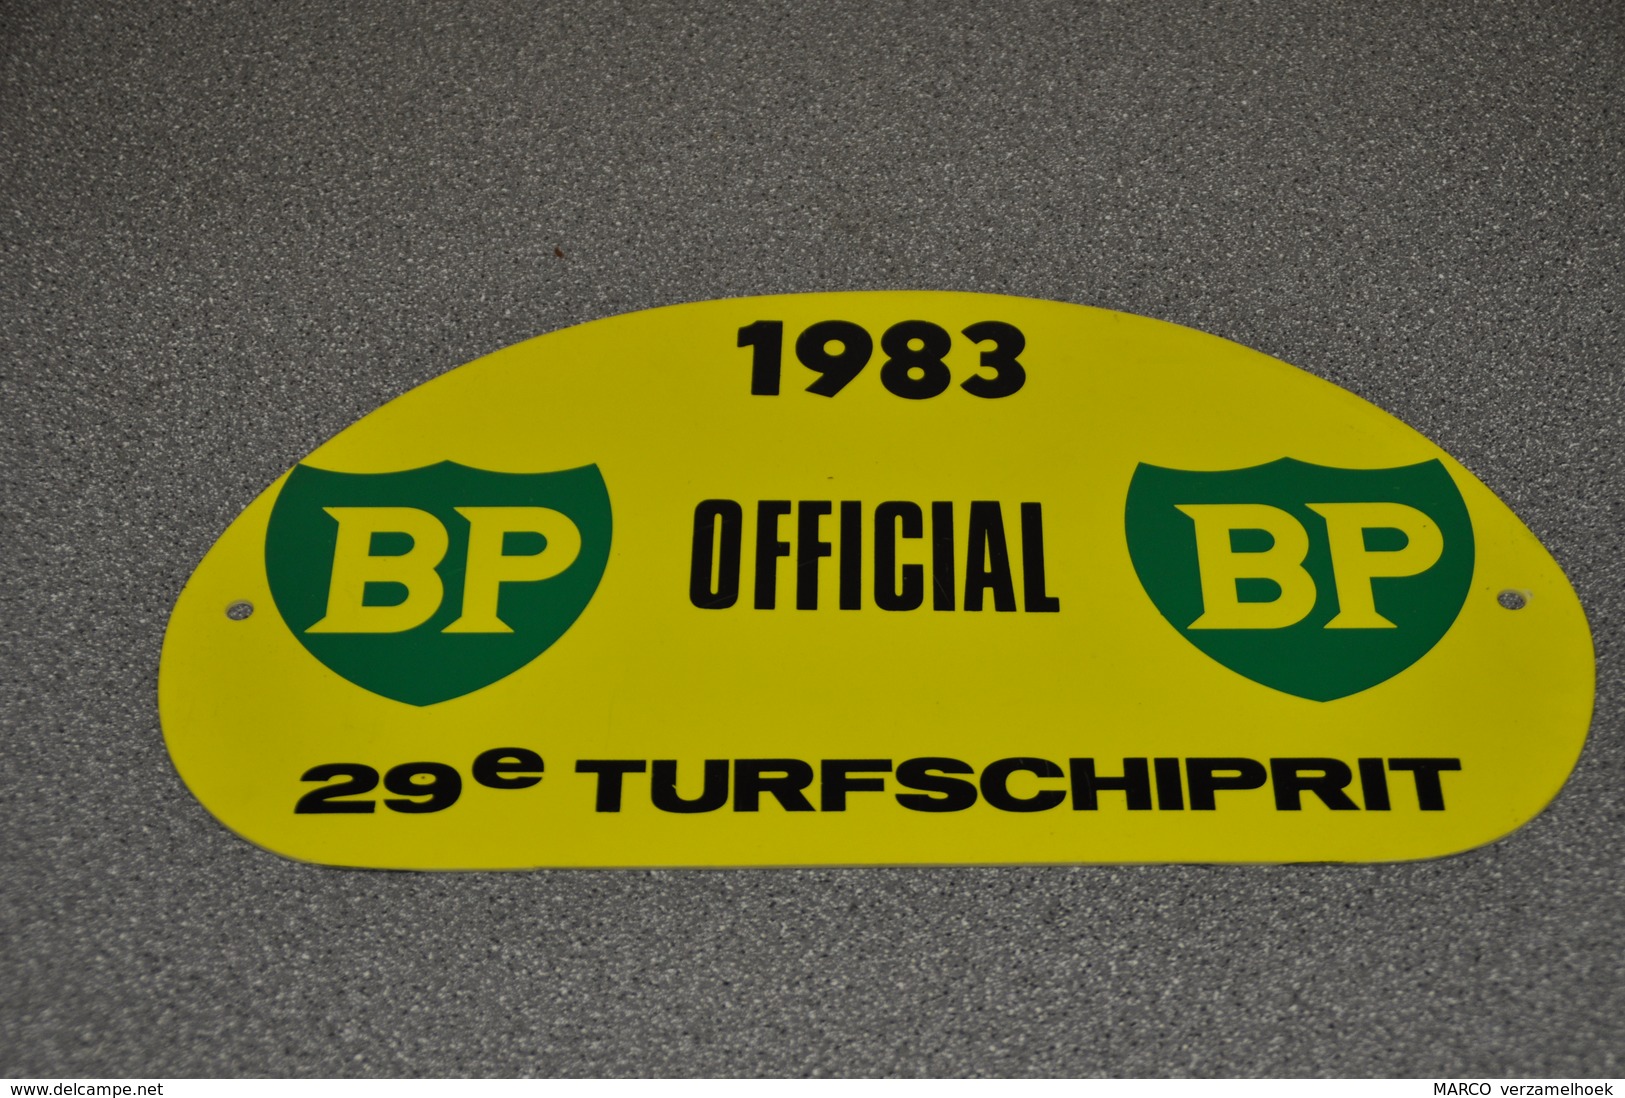 Rally Plaat-rallye Plaque Plastic: 29e Turfschiprit Breda 1983 OFFICIAL BP - Rallyeschilder